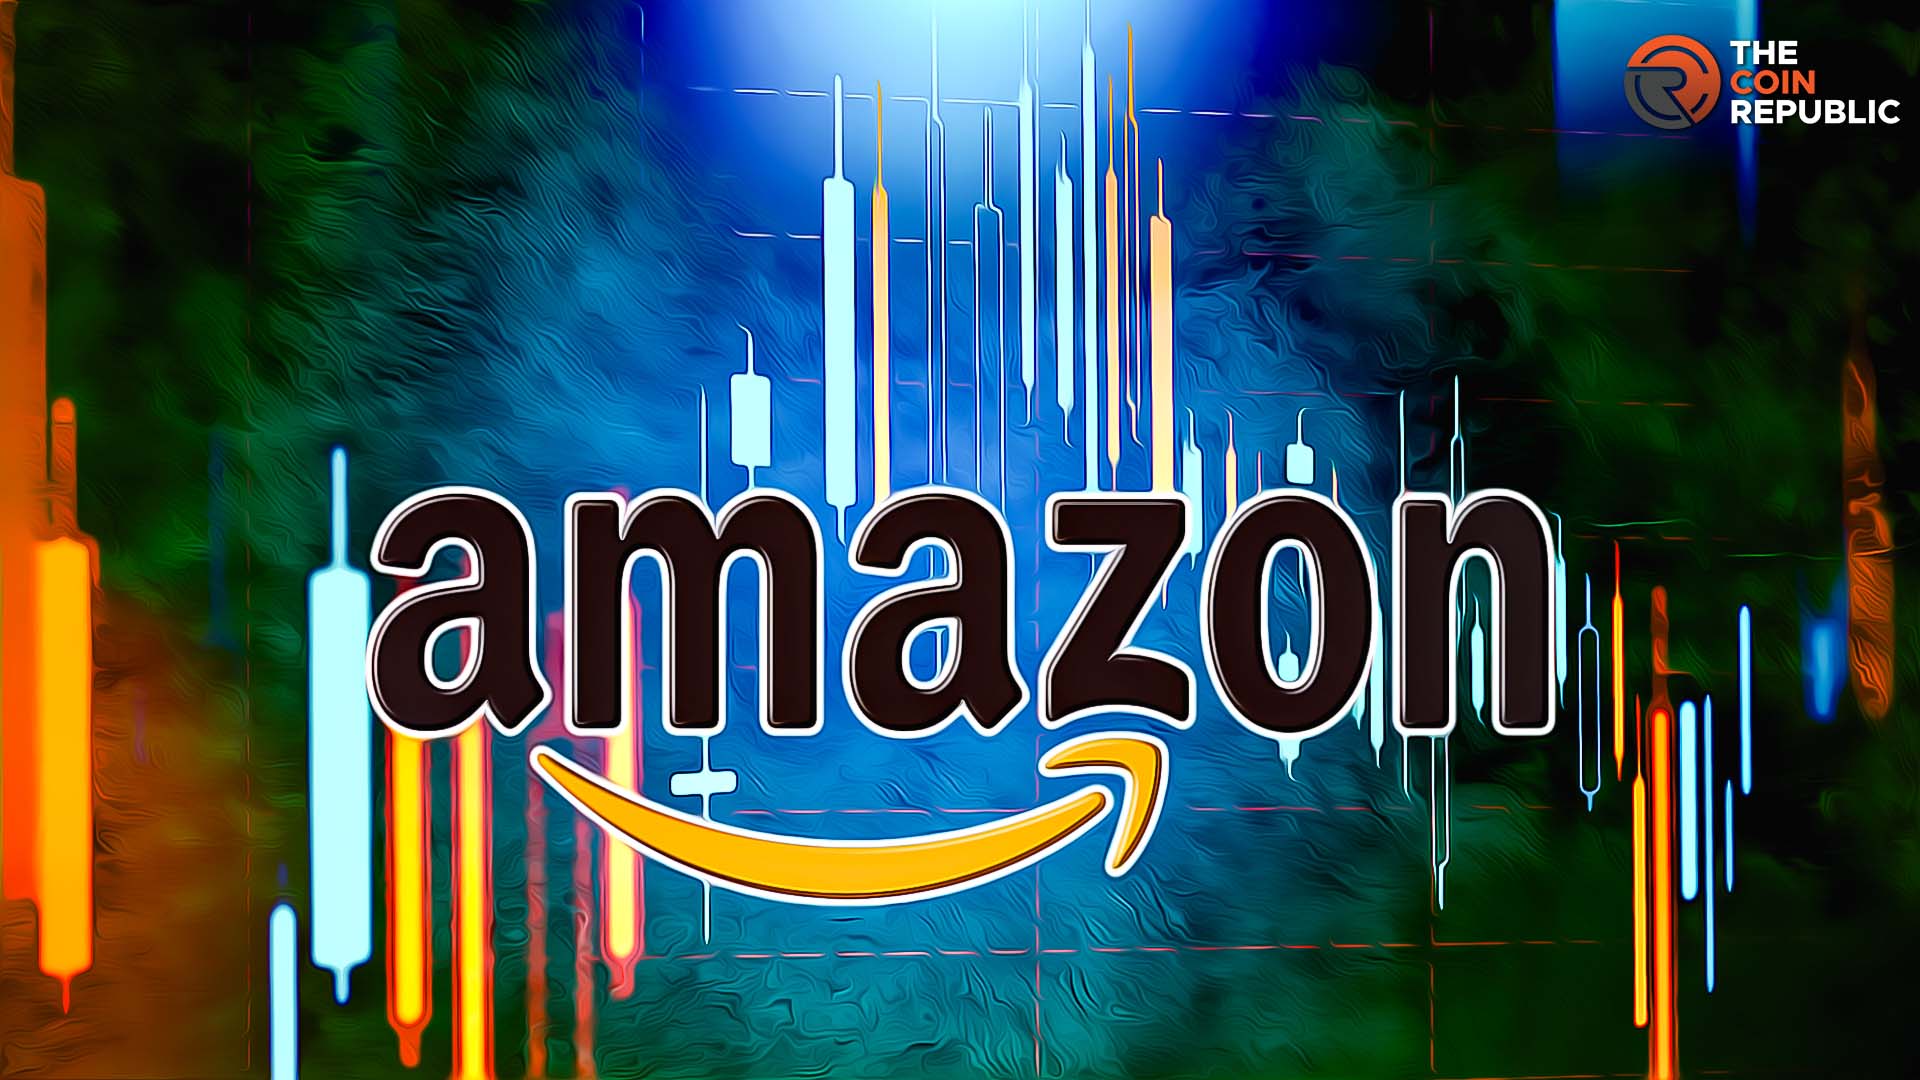 Amazon.com Inc. (AMZN Stock) – Will Riding AI Bandwagon Help?